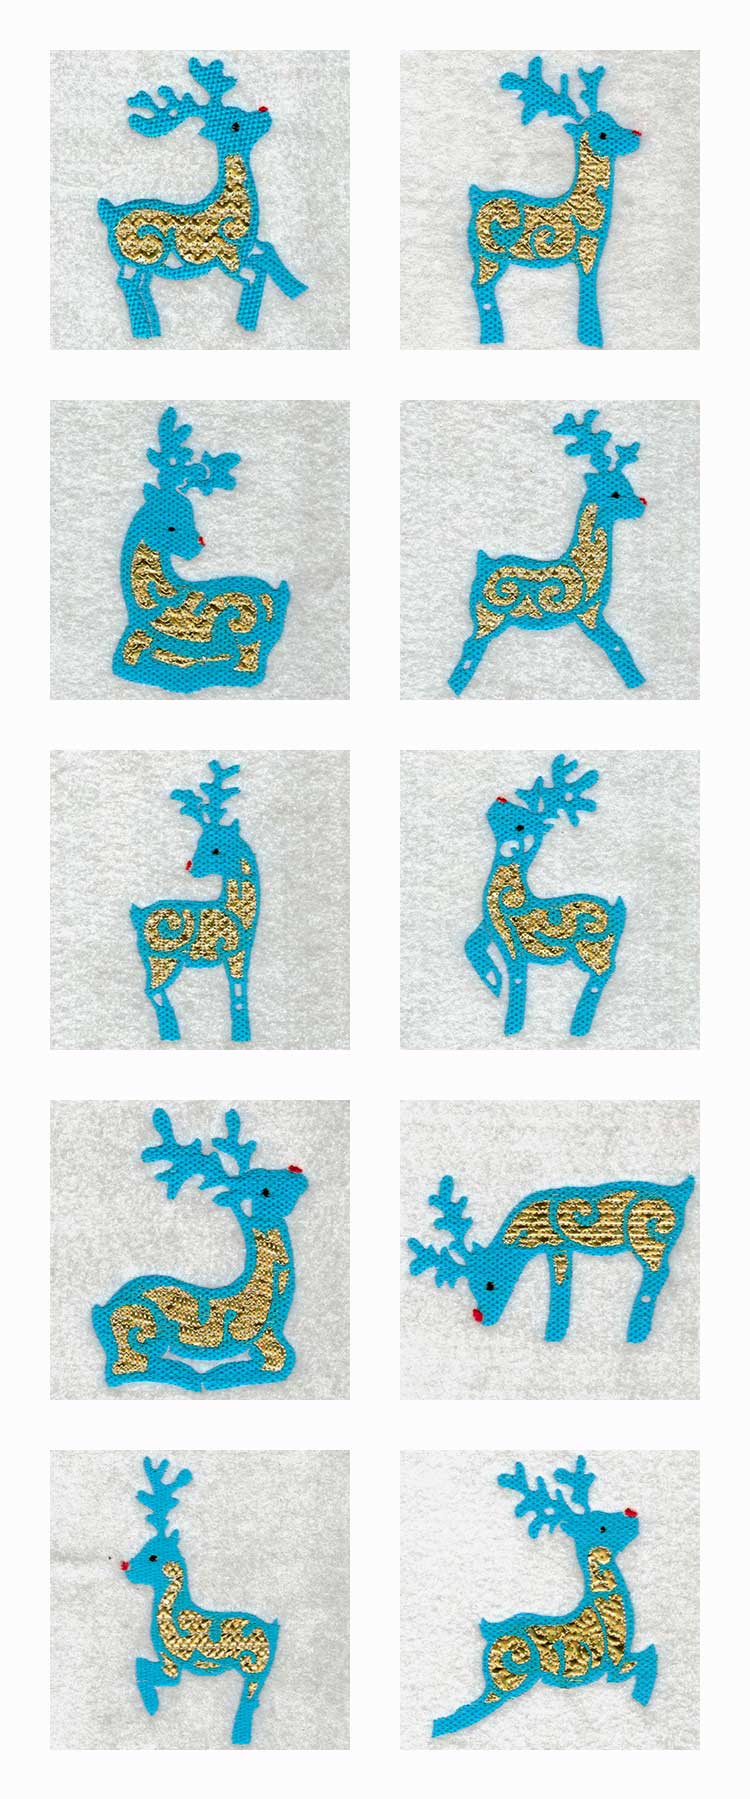 Mylar Rudy Deer Embroidery Machine Design Details